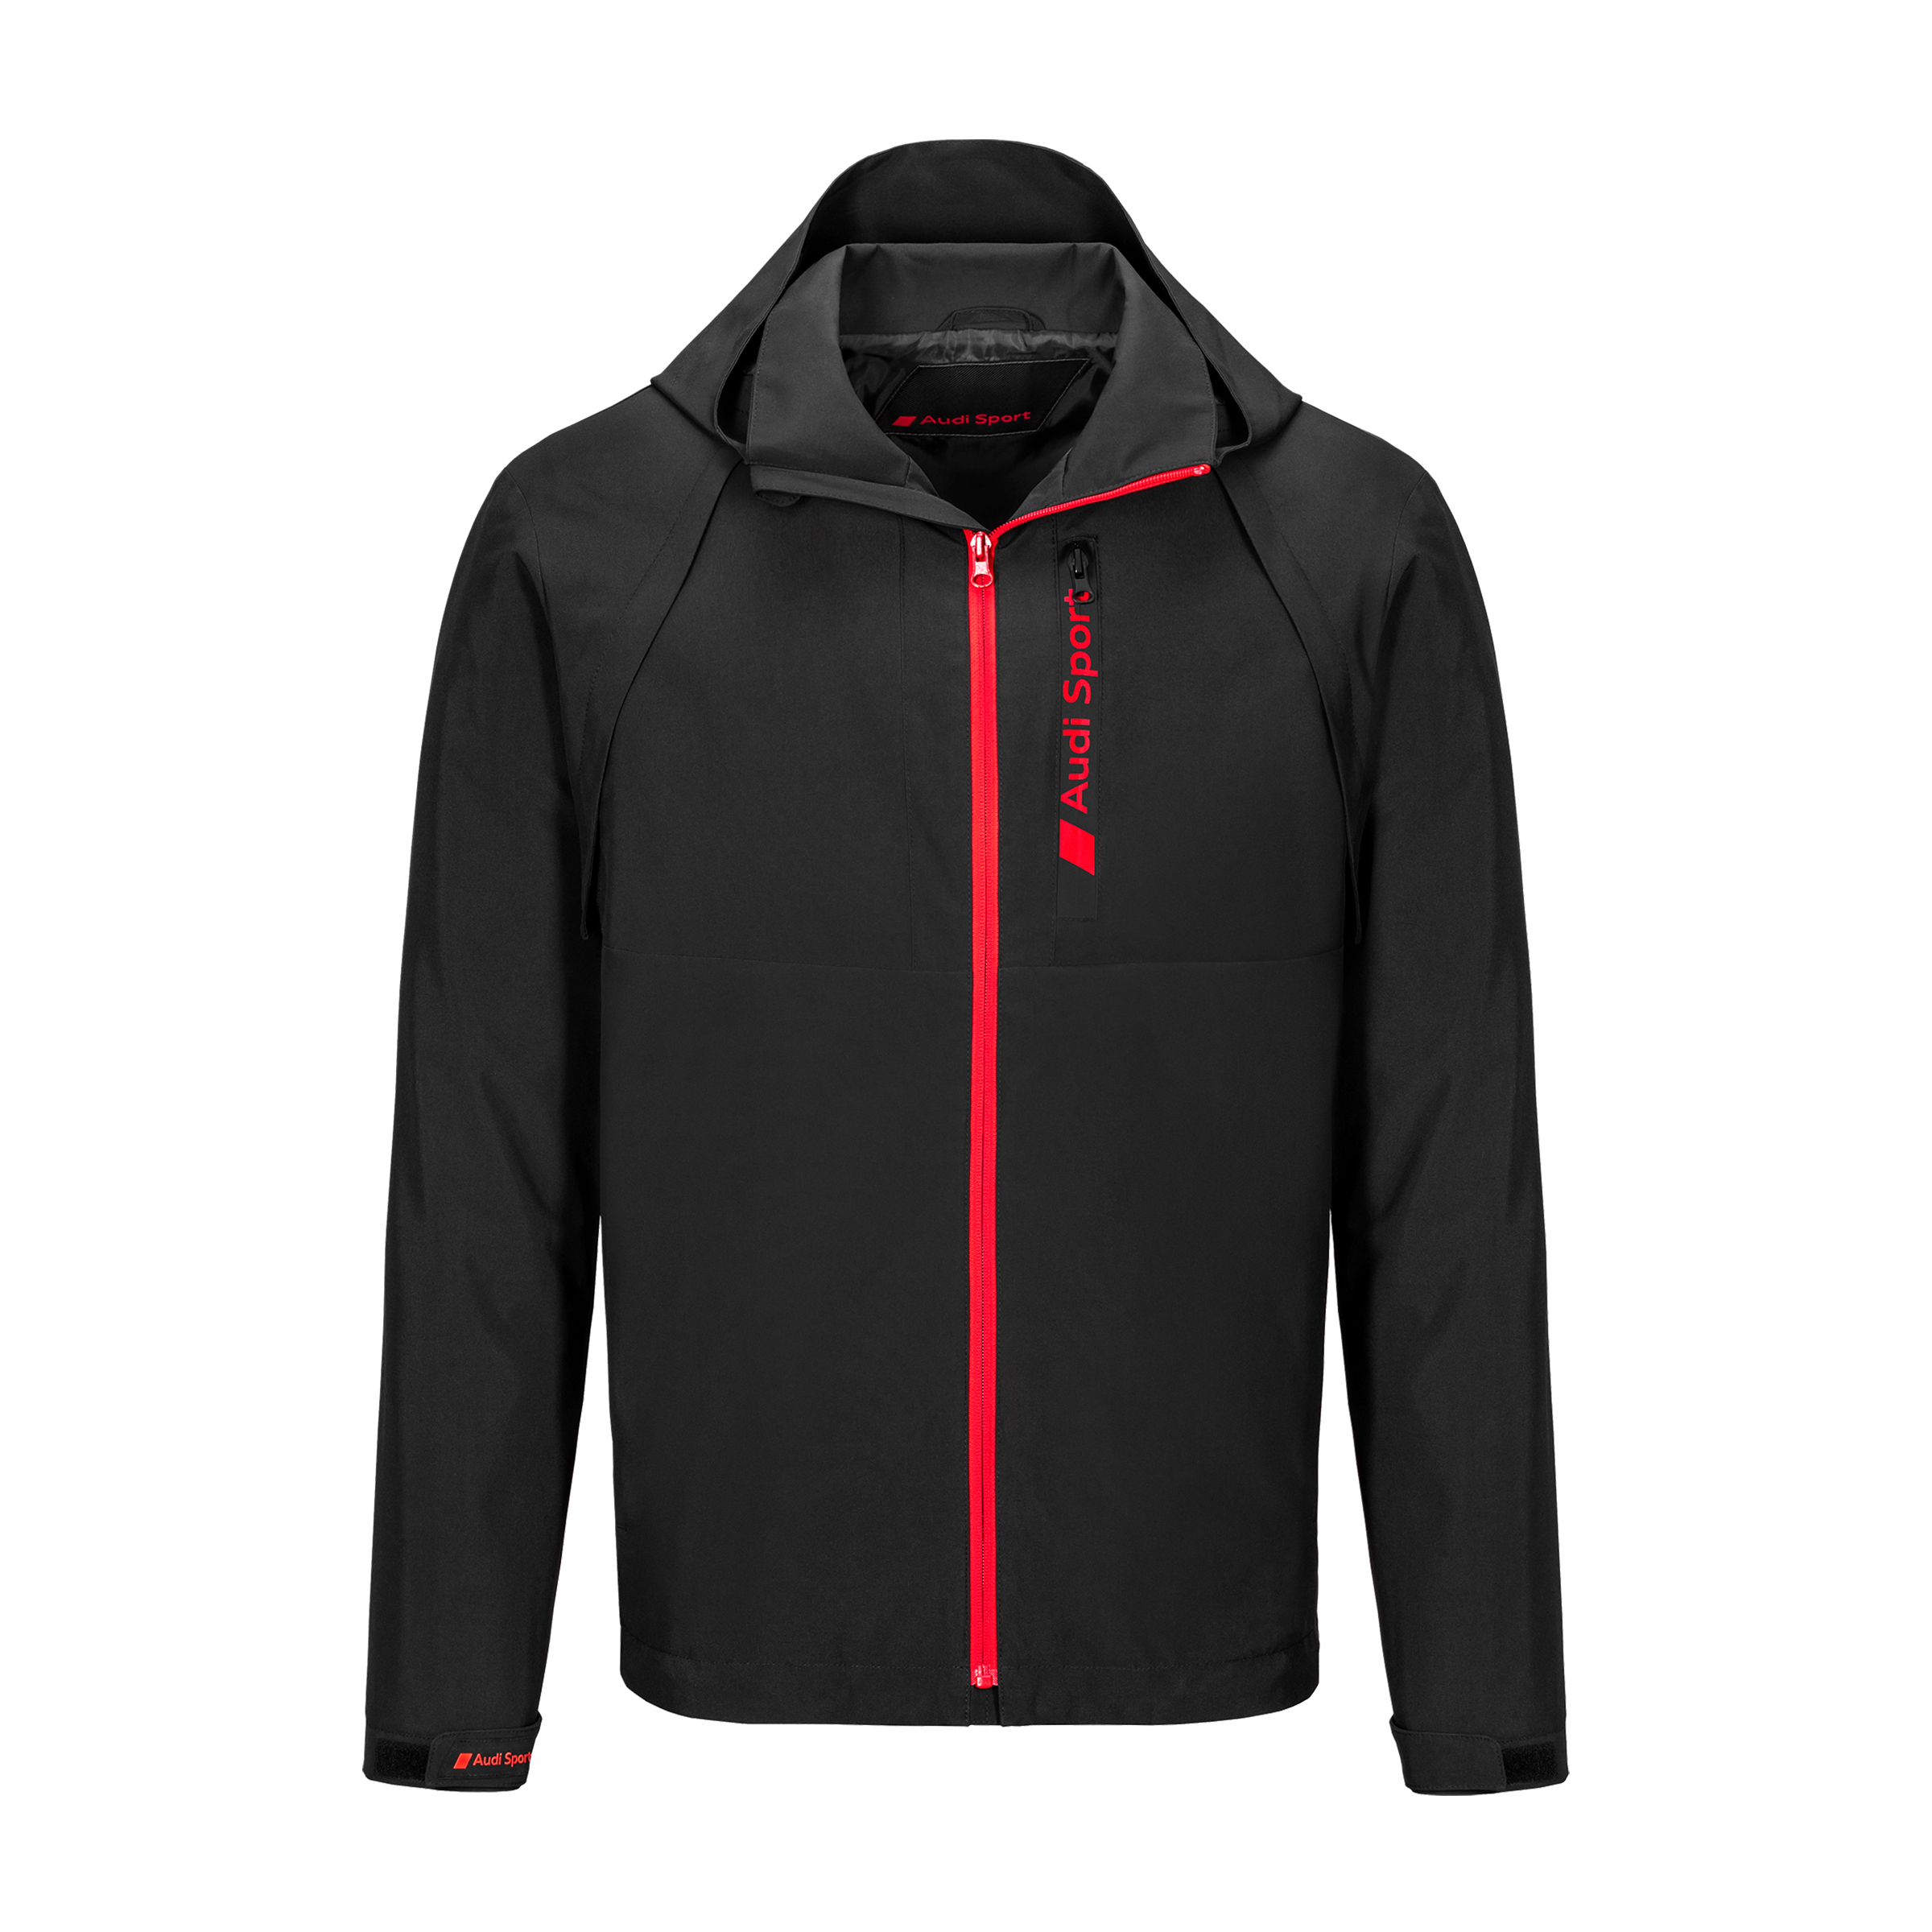 Audi Sport Zipoffjacket, Mens, | Jackets & pullovers Men | Clothing | Categories | Audi collection